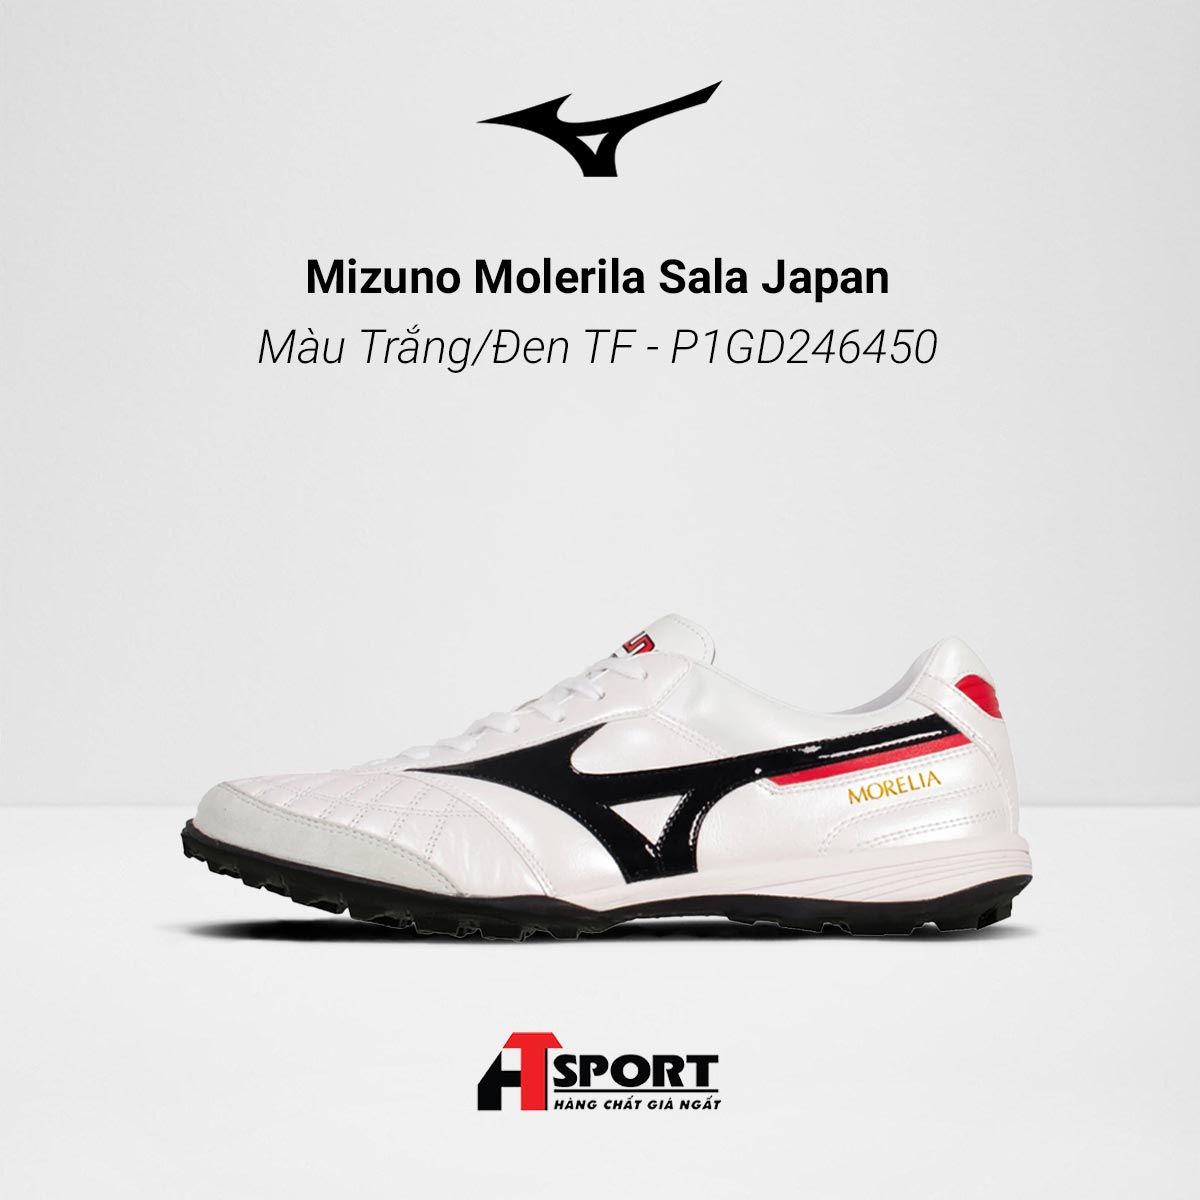  Mizuno Morelia Sala Japan - Màu Trắng/Đen TF - Q1GB210009 